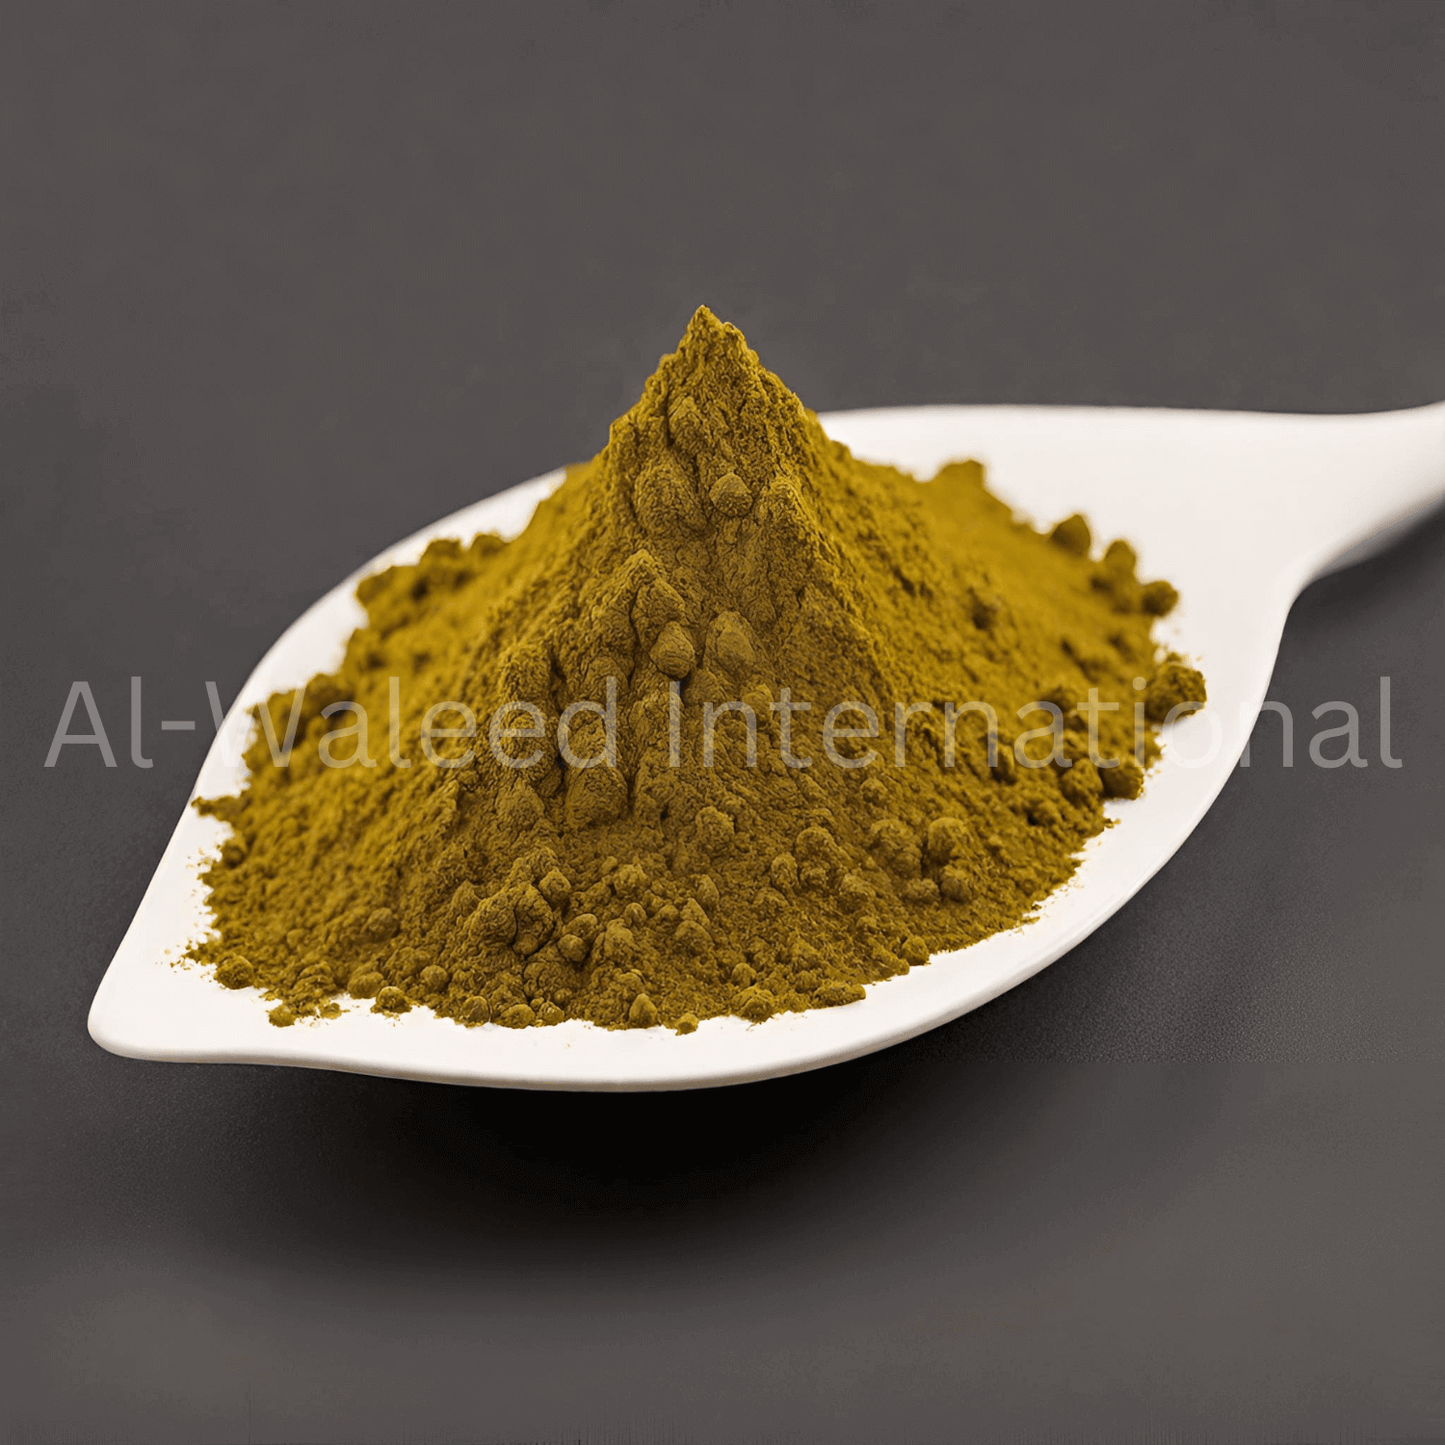 Henna Powder Black (Indigofera Tinctoria) - Al Waleed International